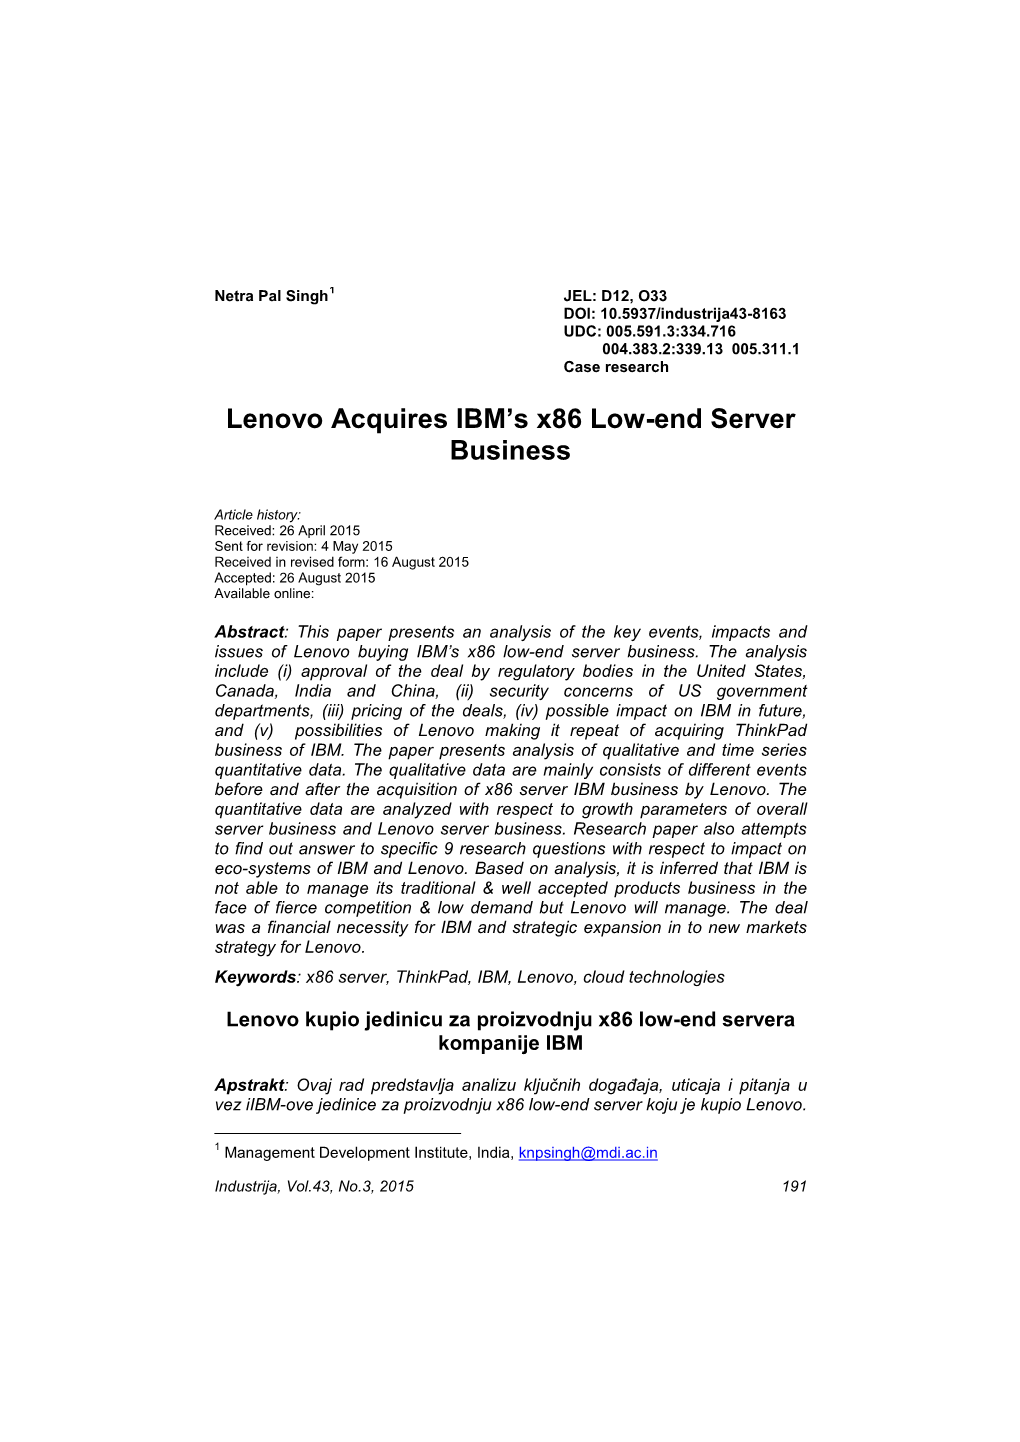 Lenovo Acquires IBM's X86 Low-End Server Business